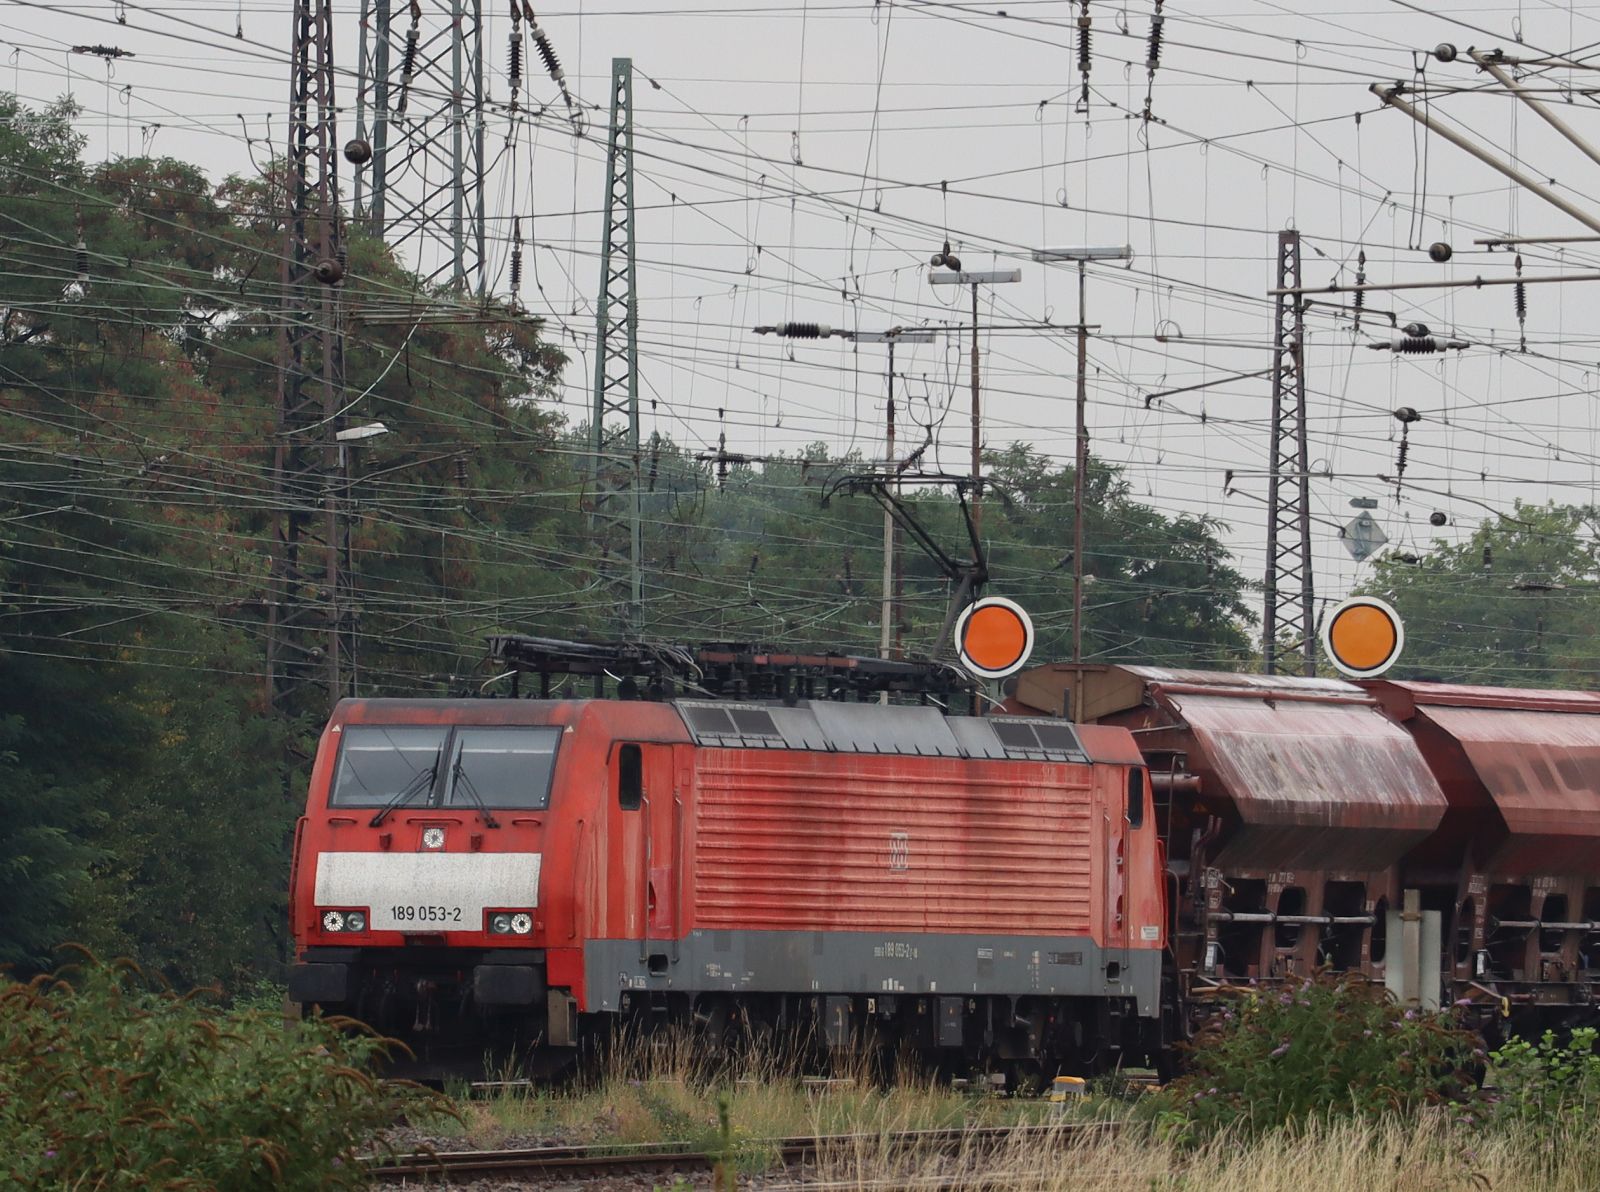 DB Cargo Lokomotive 189 053-2 Gterbahnhof Oberhausen West 18-08-2022.

DB Cargo locomotief 189 053-2 goederenstation Oberhausen West 18-08-2022.